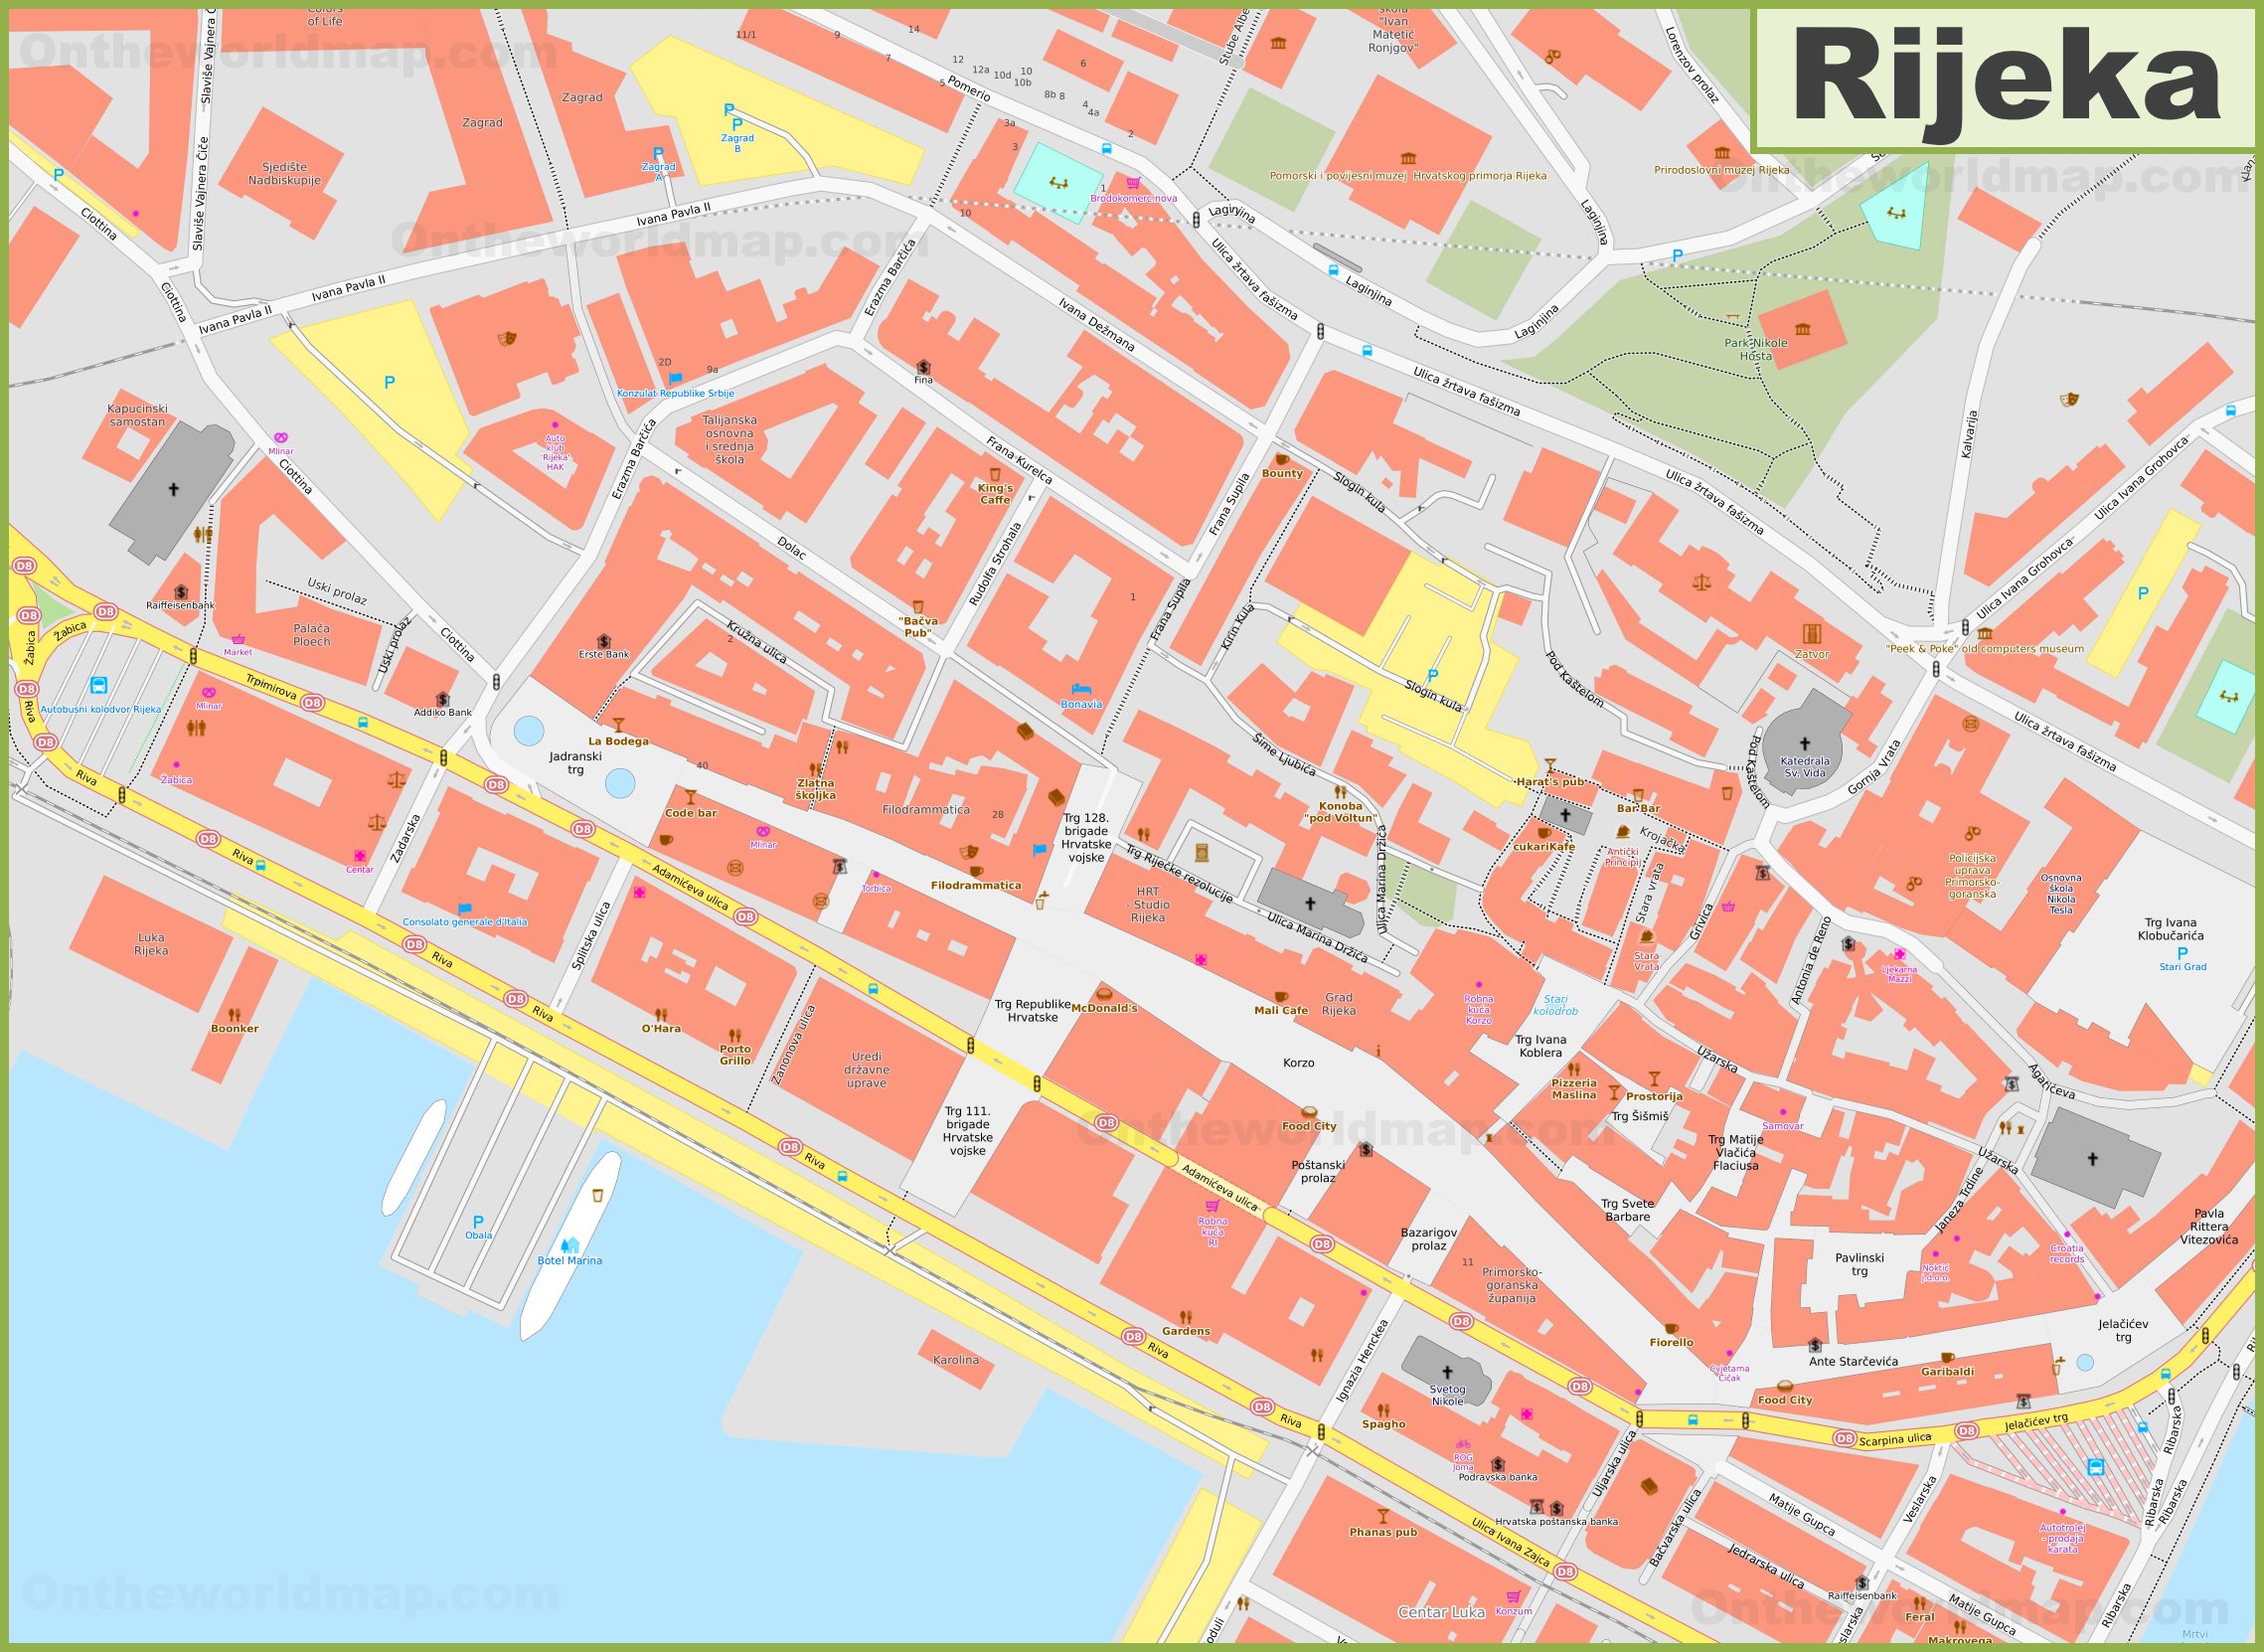 rijeka-old-town-map.jpg